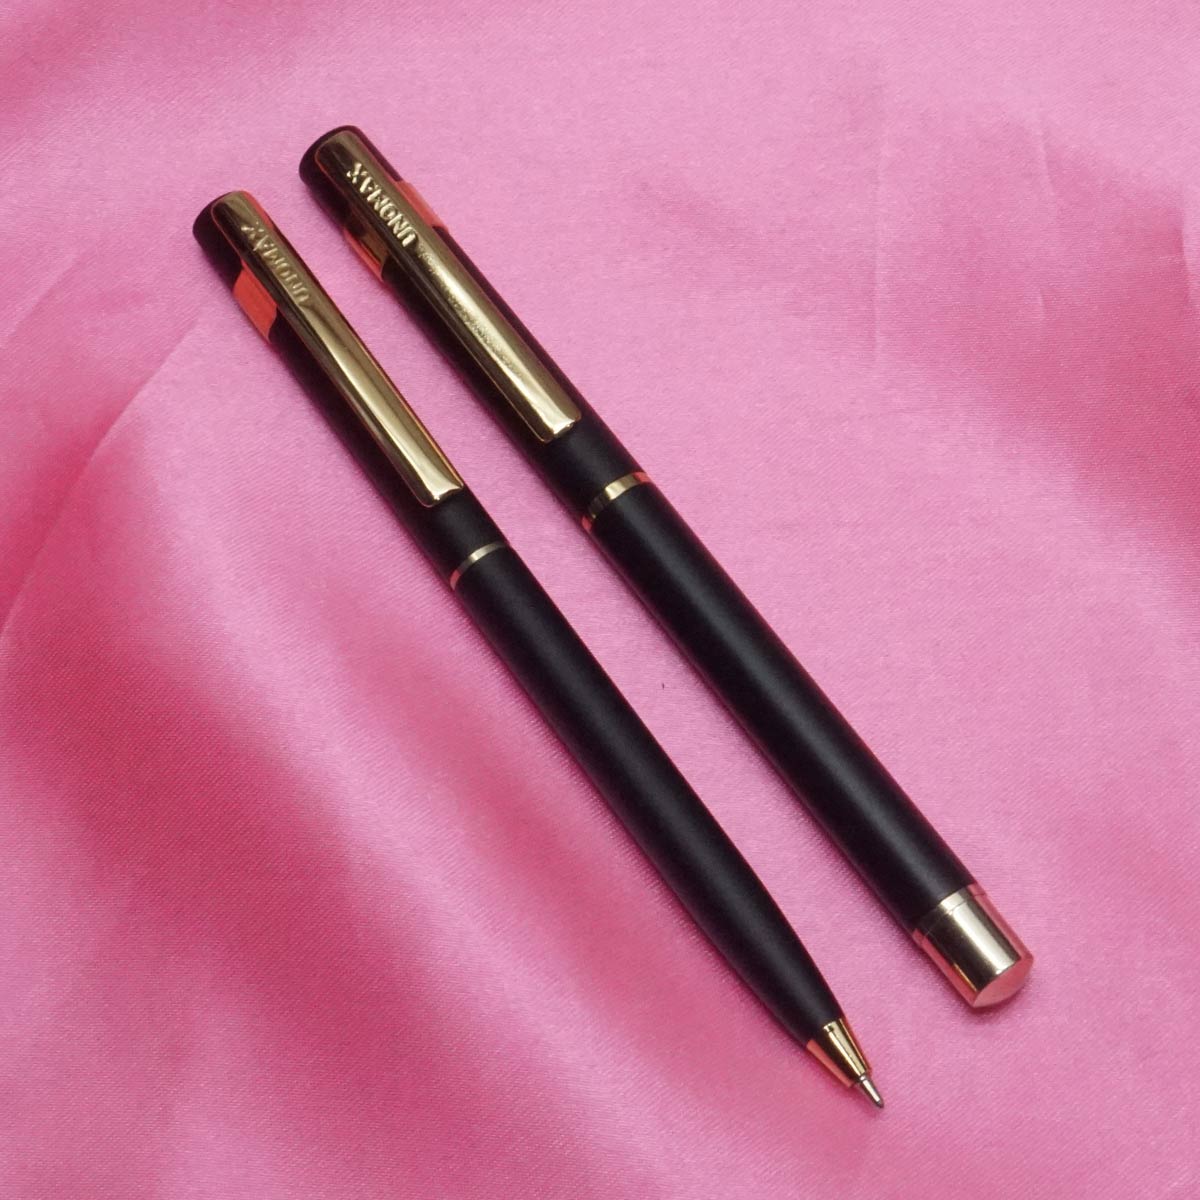 Unomax Nexa Gold Mat Black Color With Gold Trim Ball Pen And Roller Ball Pen Set SKU 21746